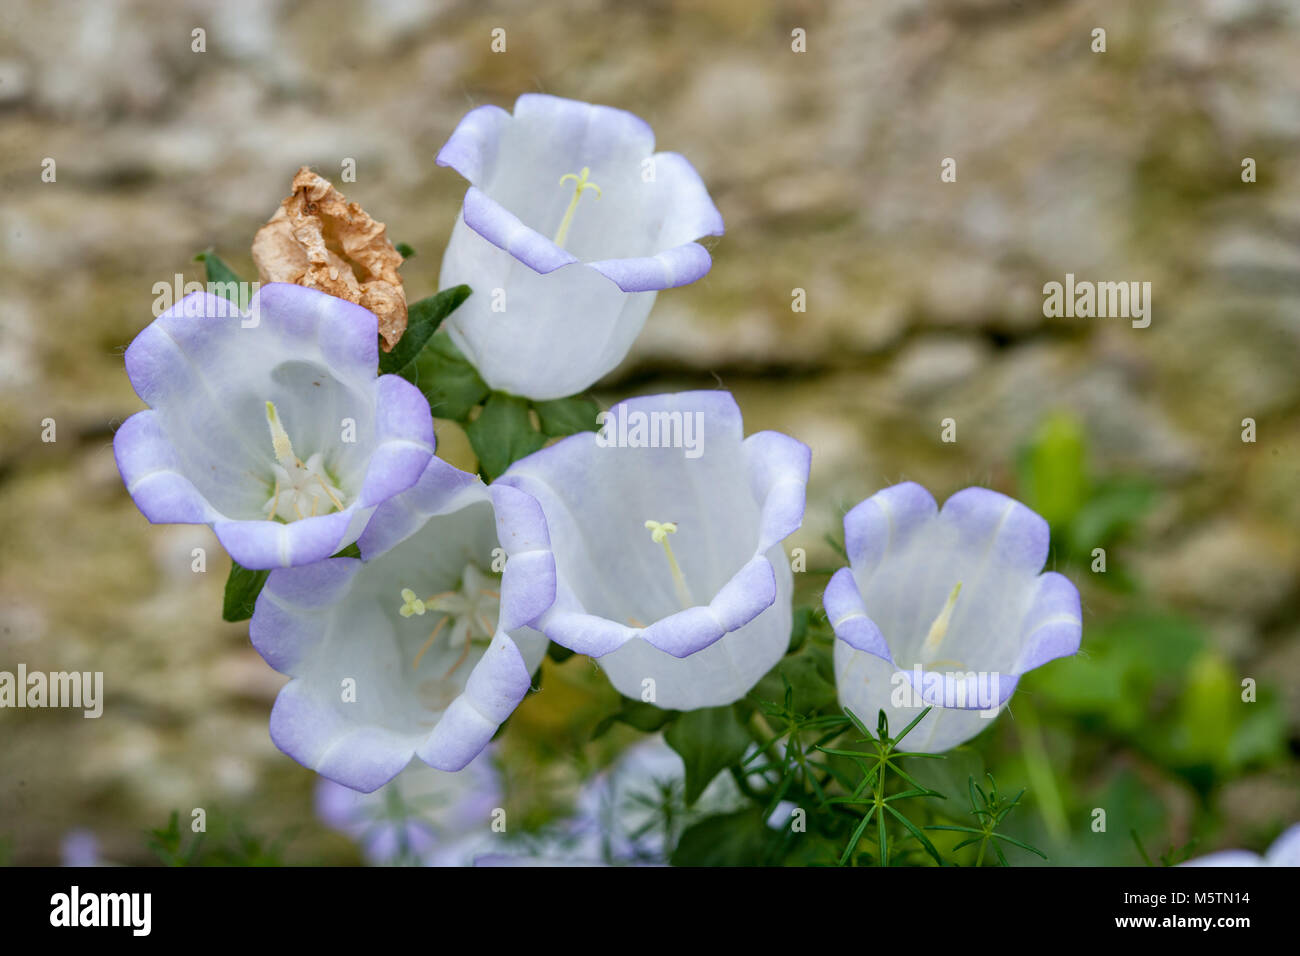 Adriatic bellflower, Italiensk klocka (Campanula fenestrella ssp istriaca) Stock Photo